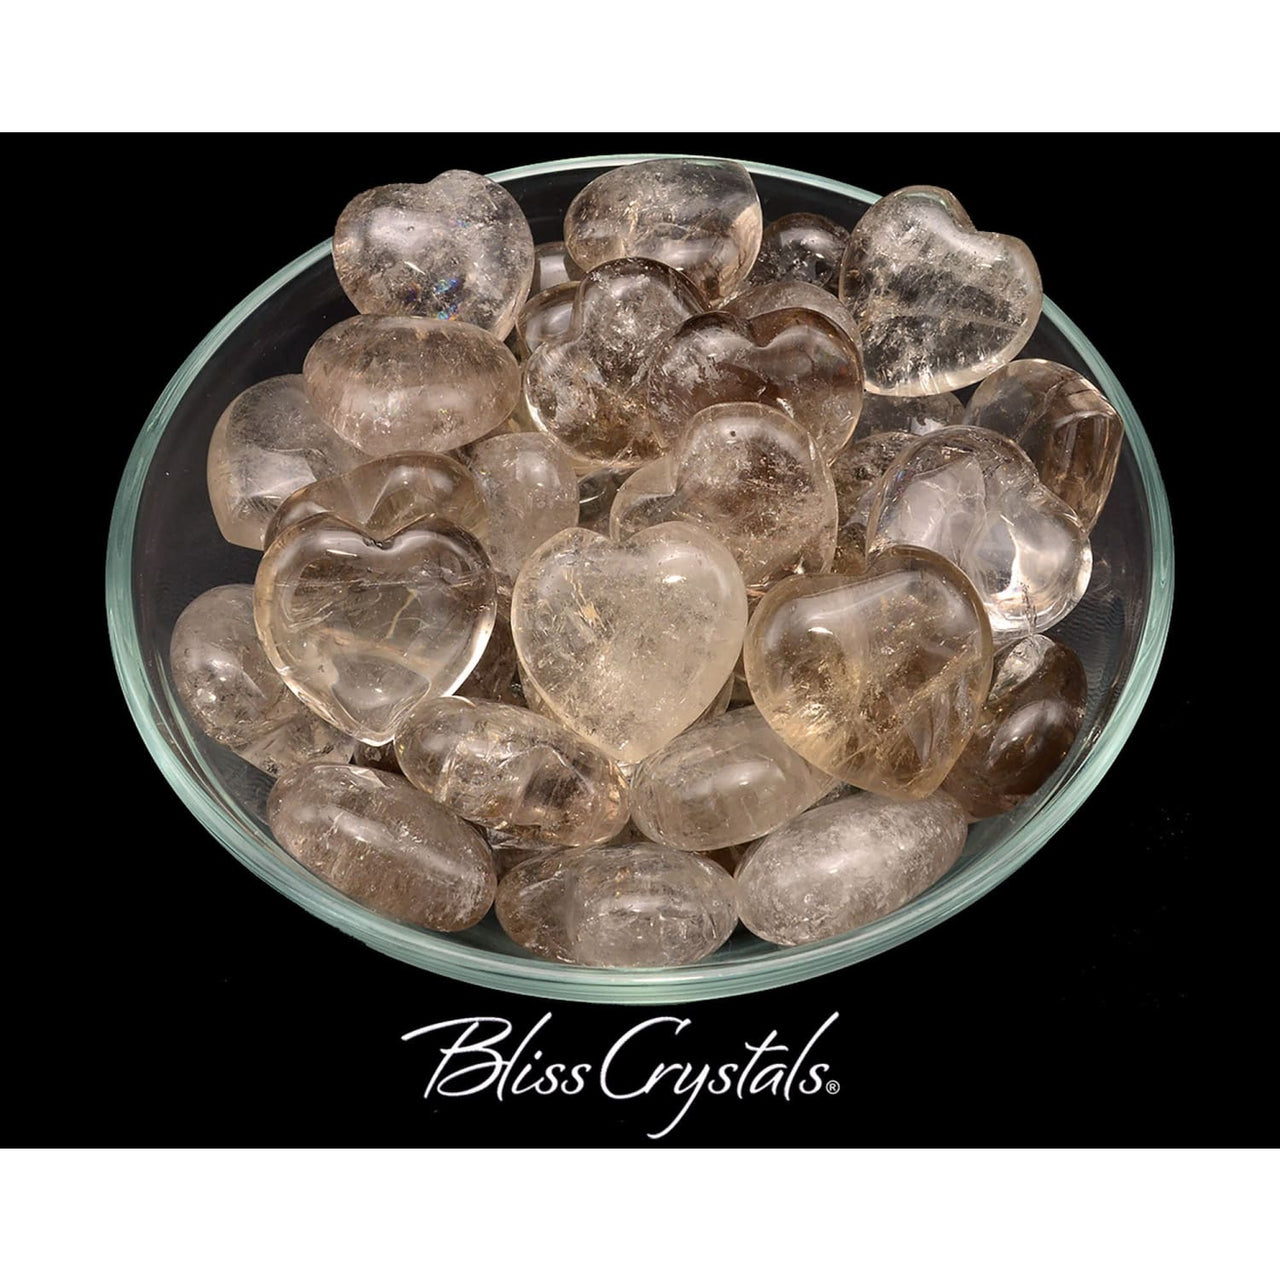 1 SMOKY QUARTZ Heart Polished Stone Healing Crystal and 